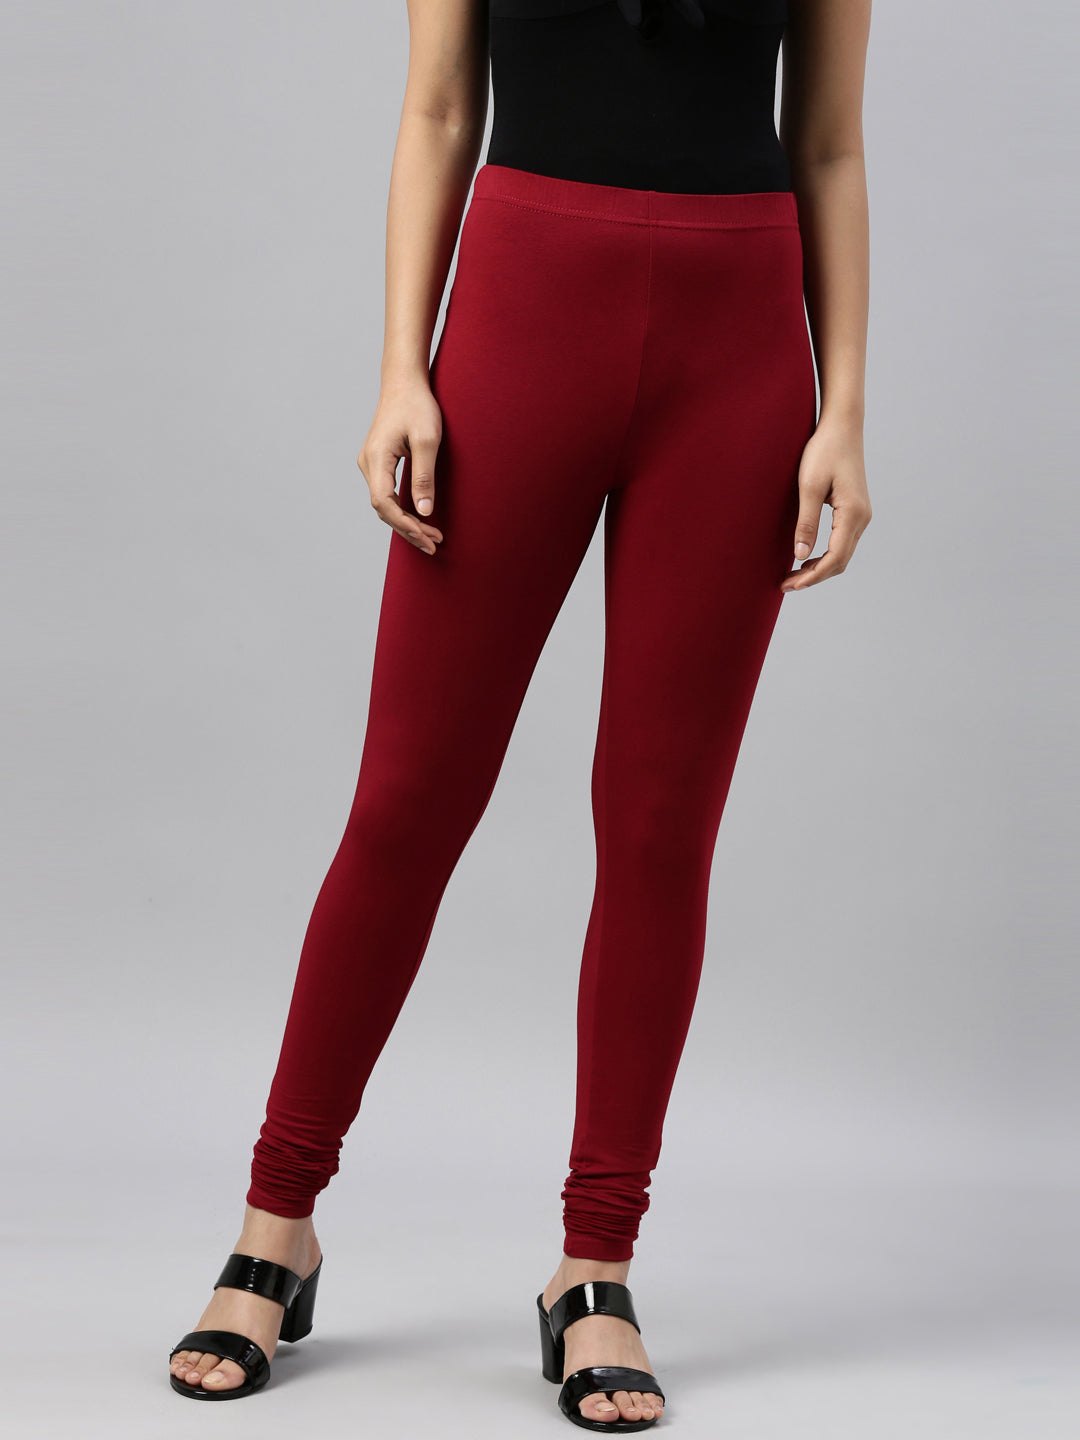 LAVRA Women's Plus Size Basic Solid Color Leggings One Size - Walmart.com